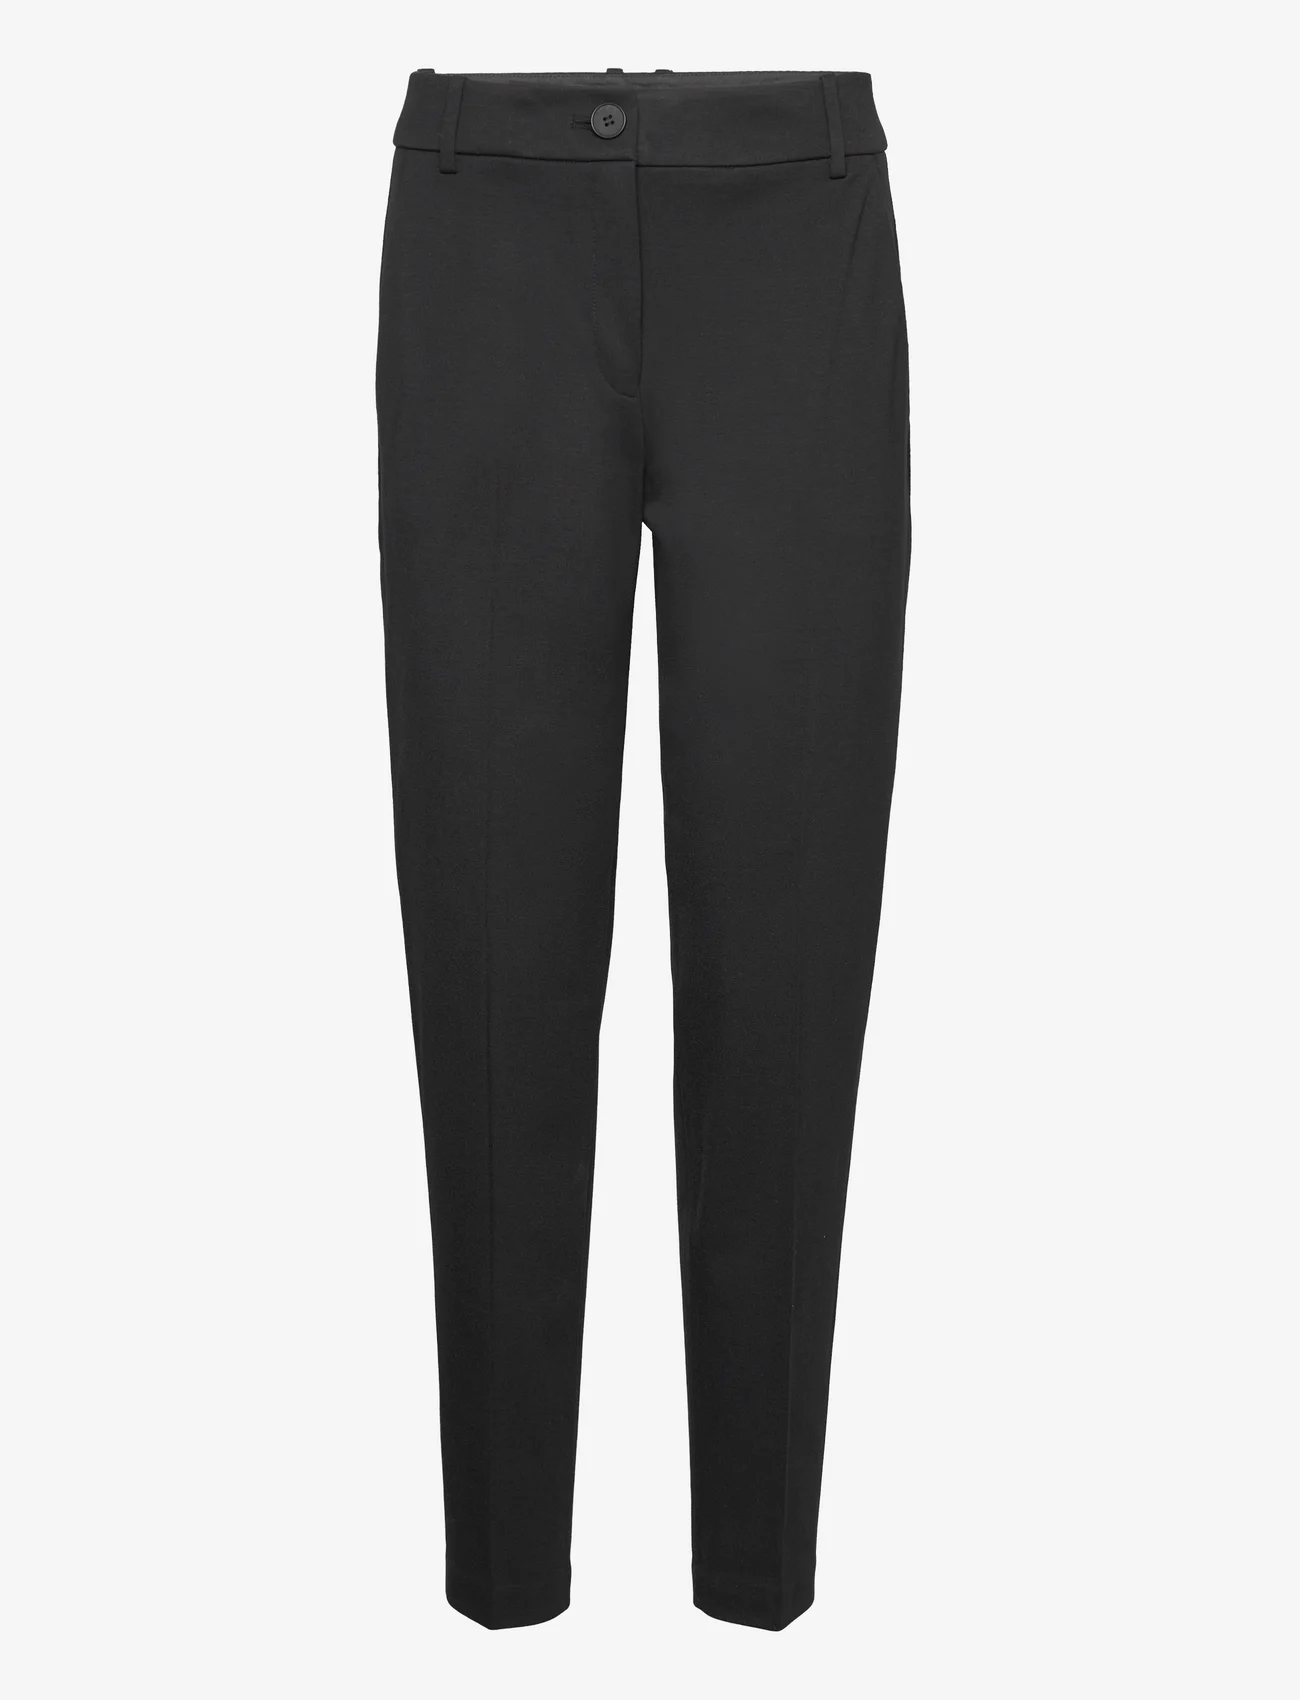 Esprit Collection - Pants woven - tiesaus kirpimo kelnės - black - 0